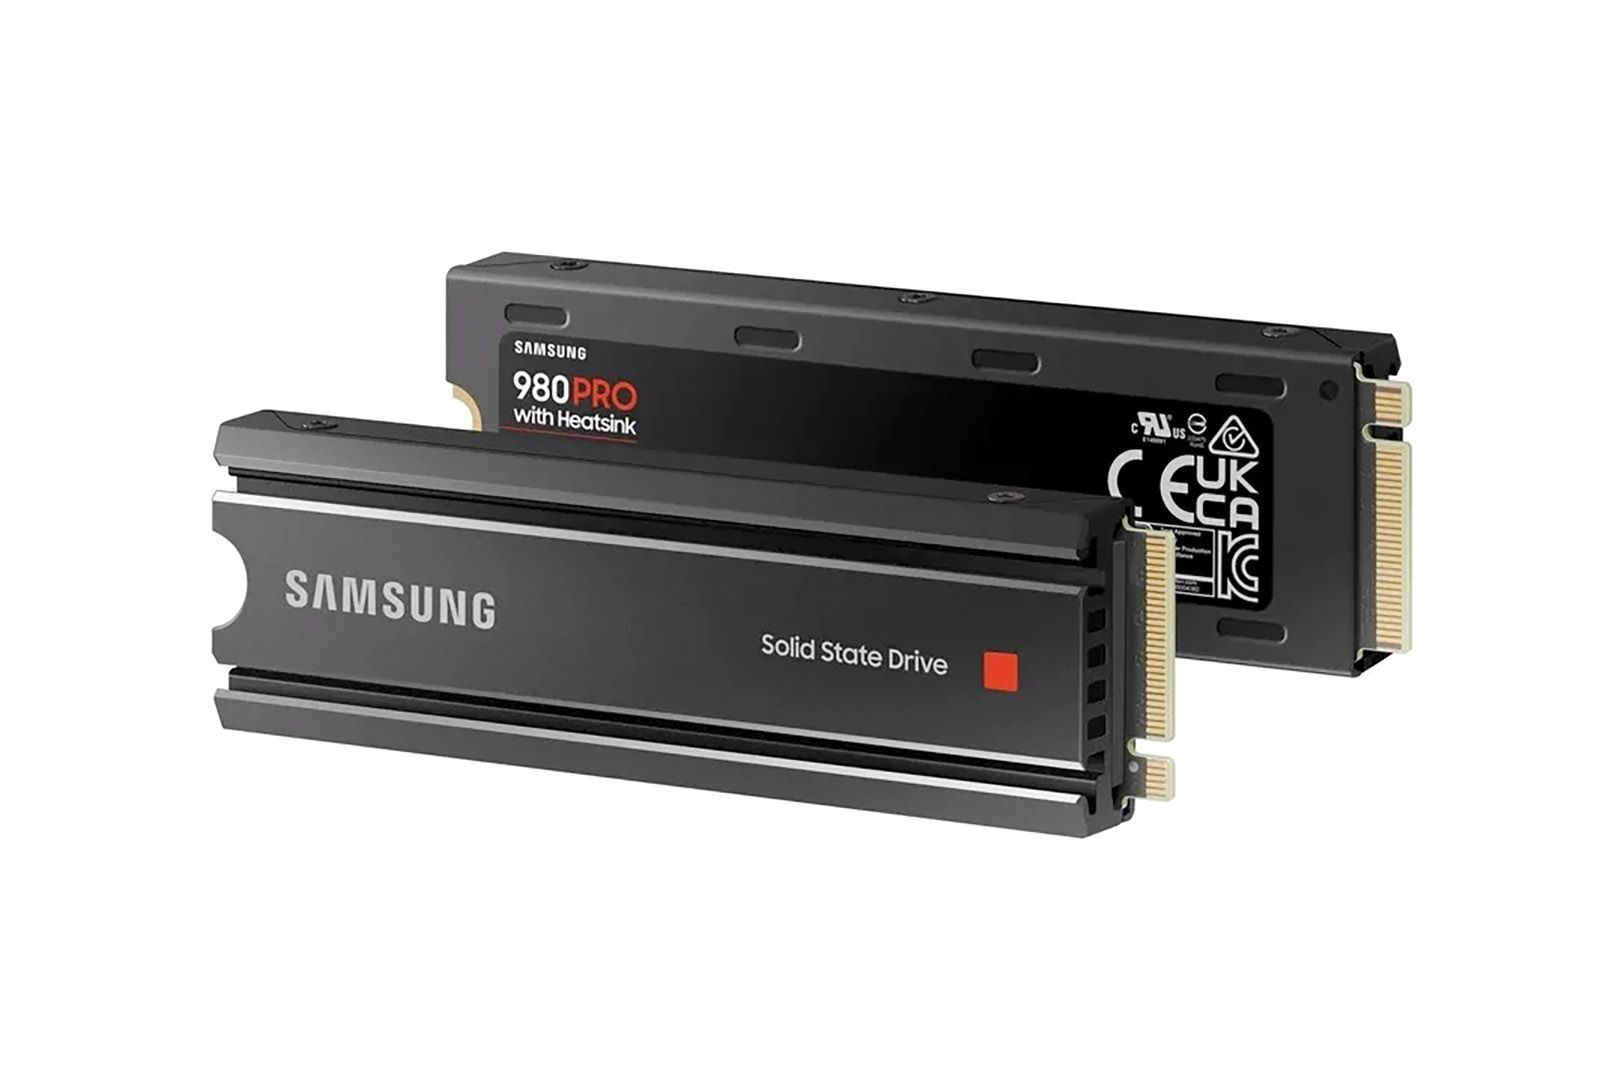 Samsung 980 Pro SSD Heatsink photo 1